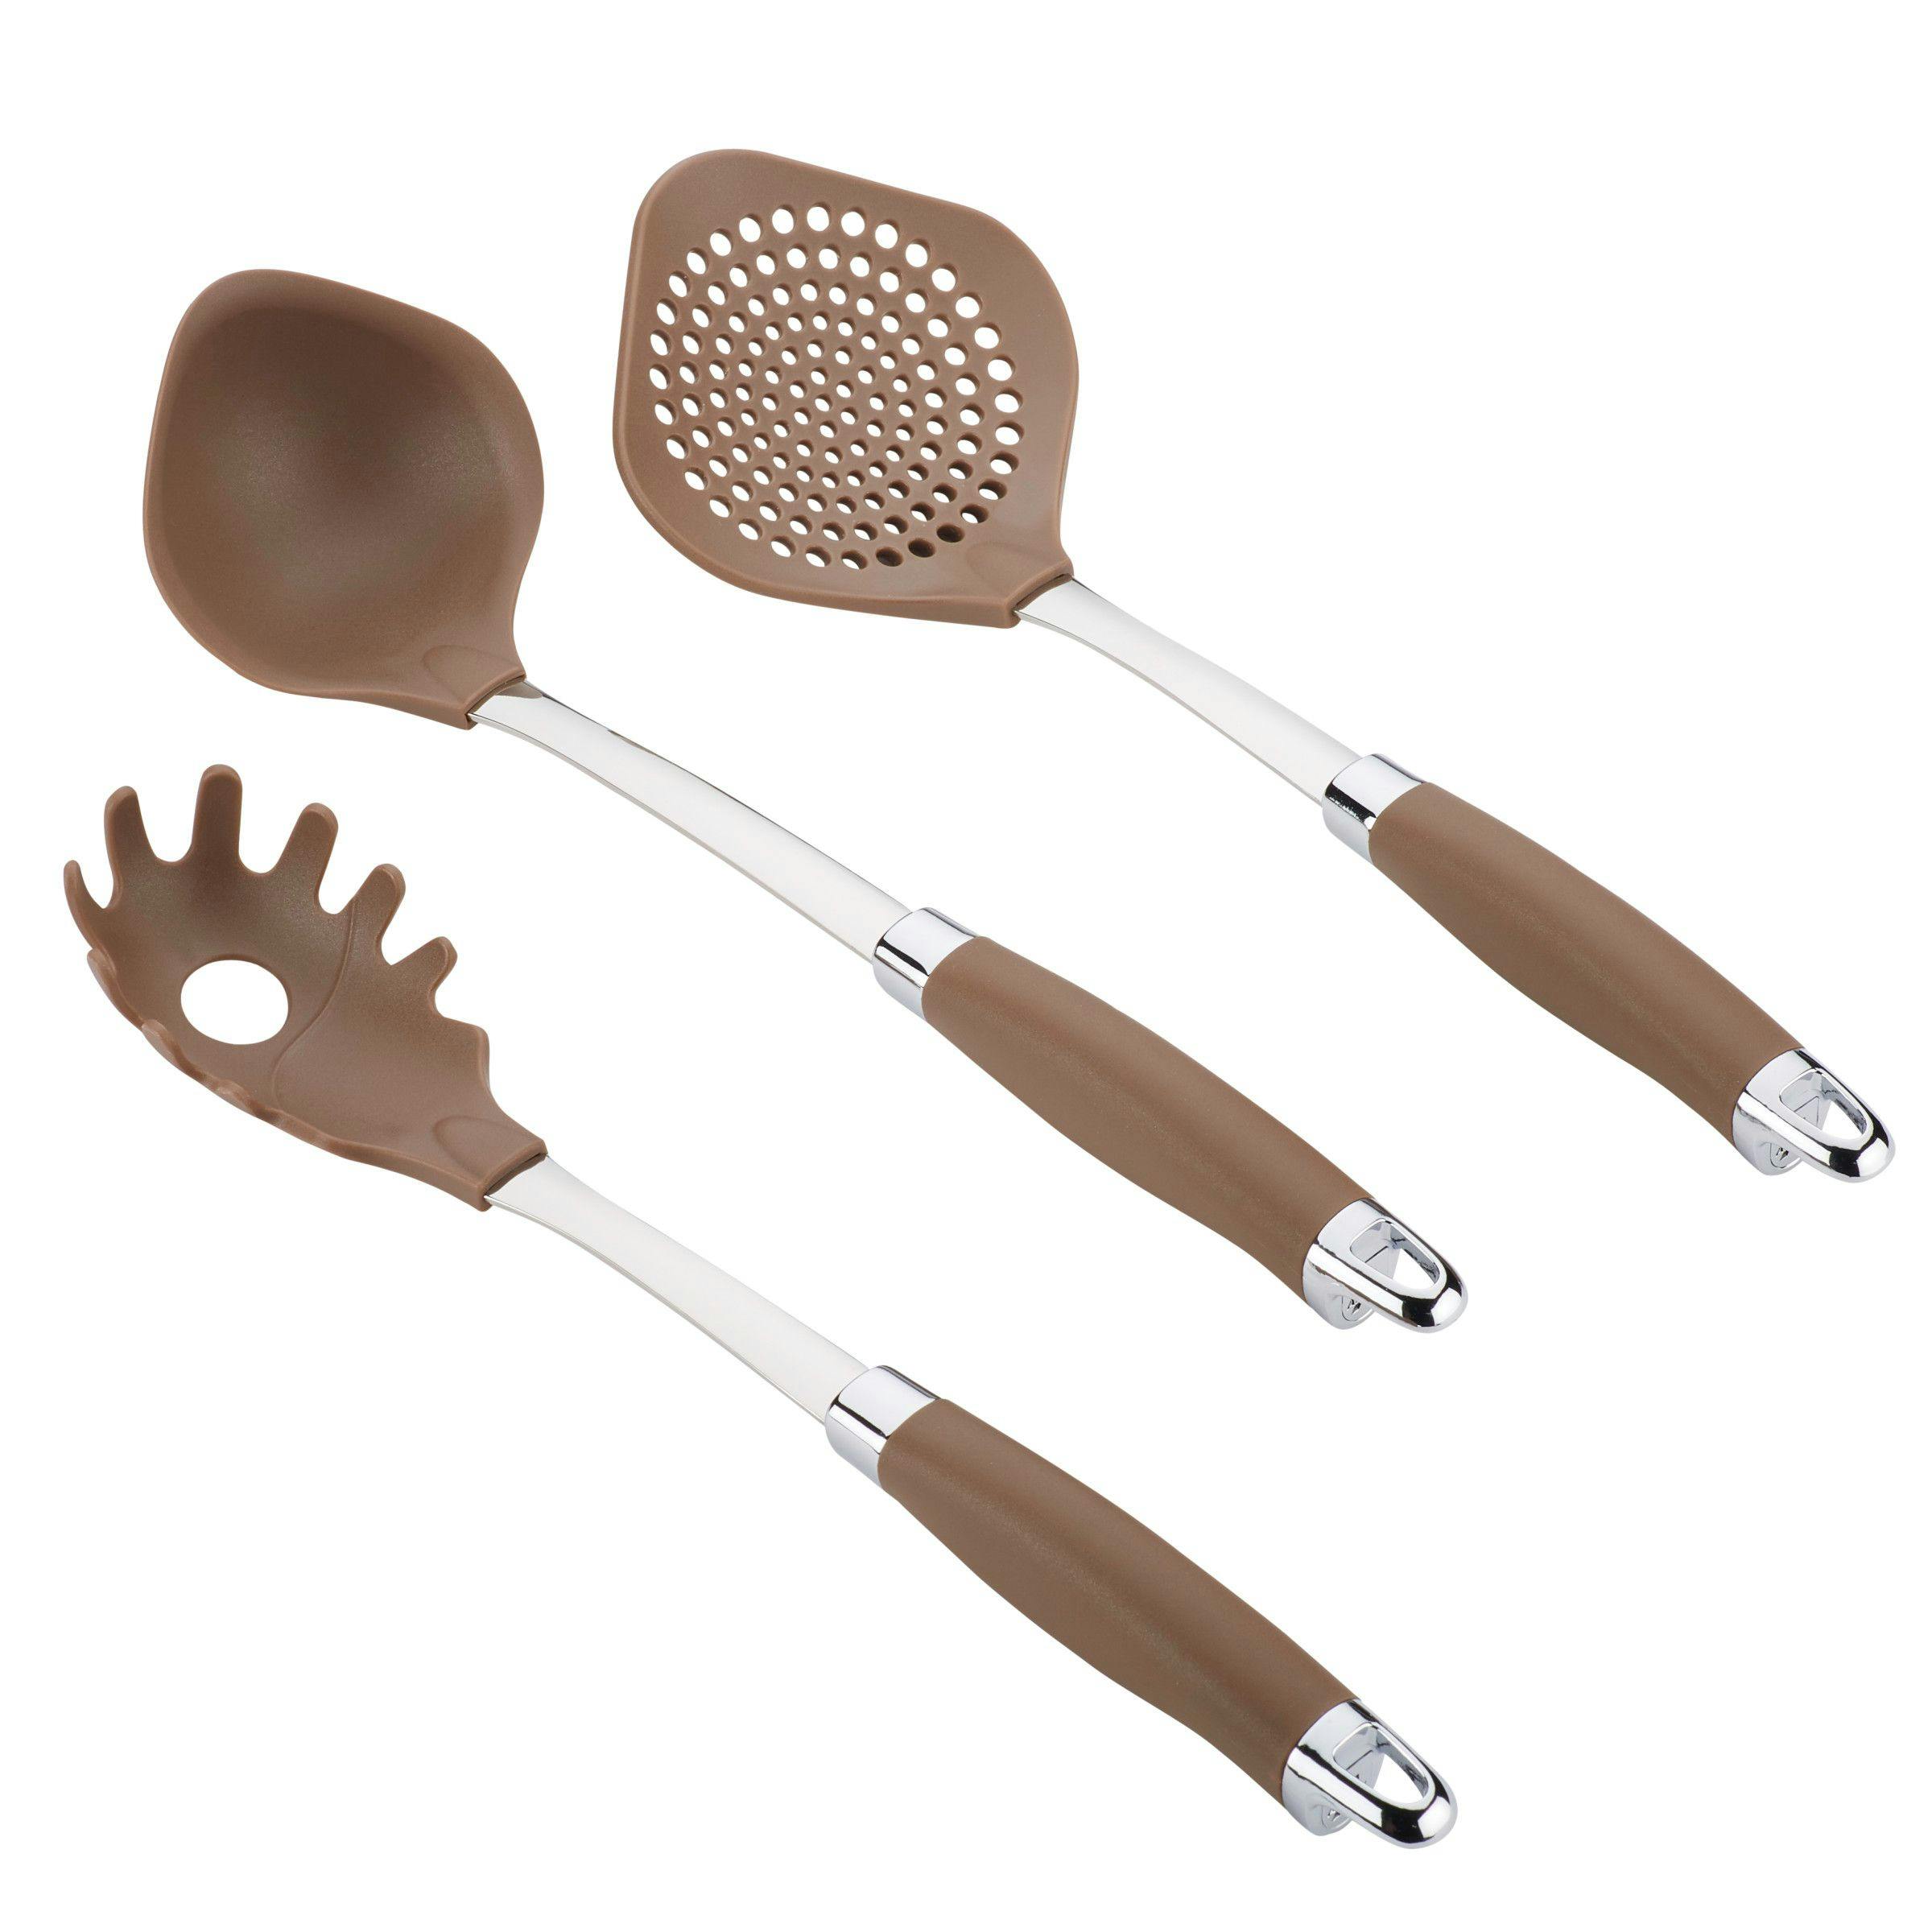 Anolon Tools and Gadgets Pasta Tool Set, 3-Piece, Bronze